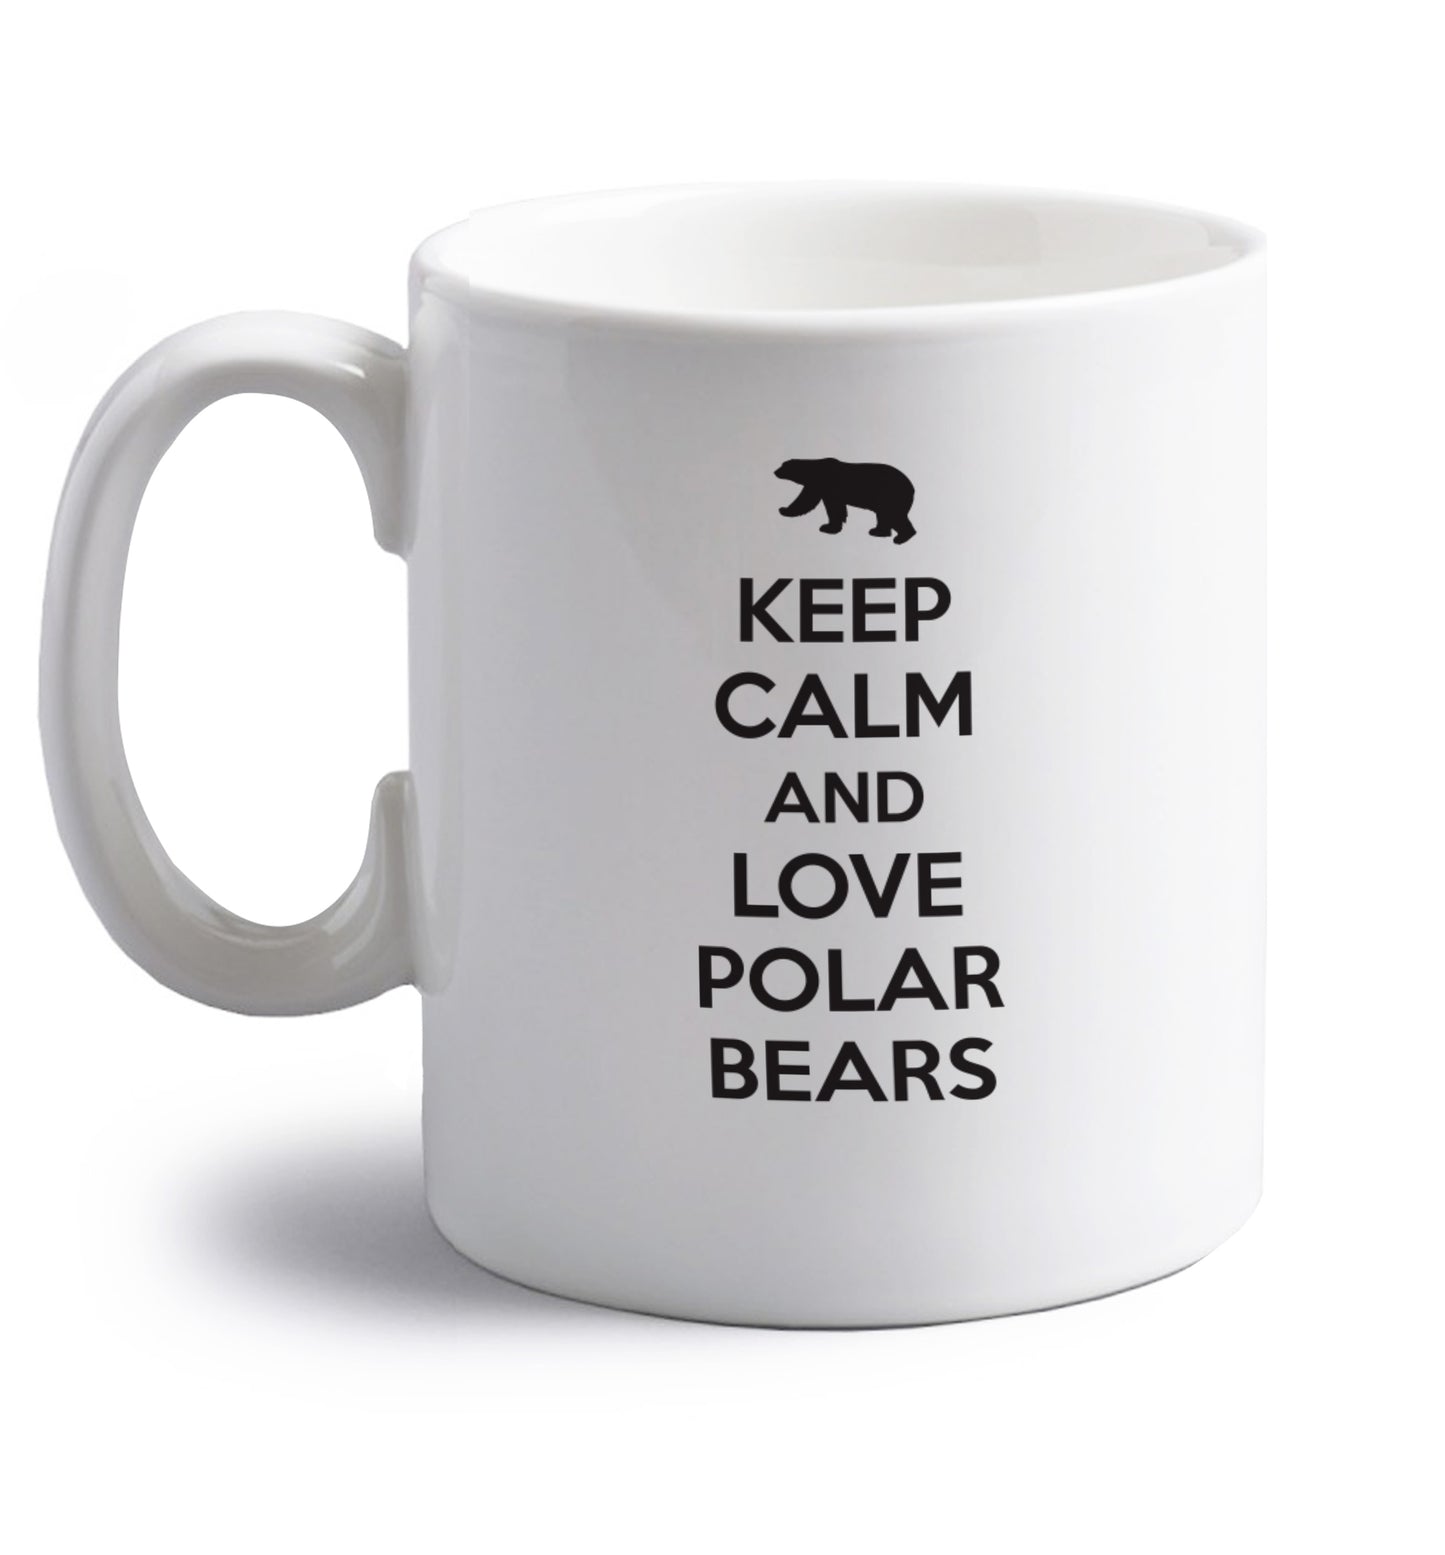 Keep calm and love polar bears right handed white ceramic mug 